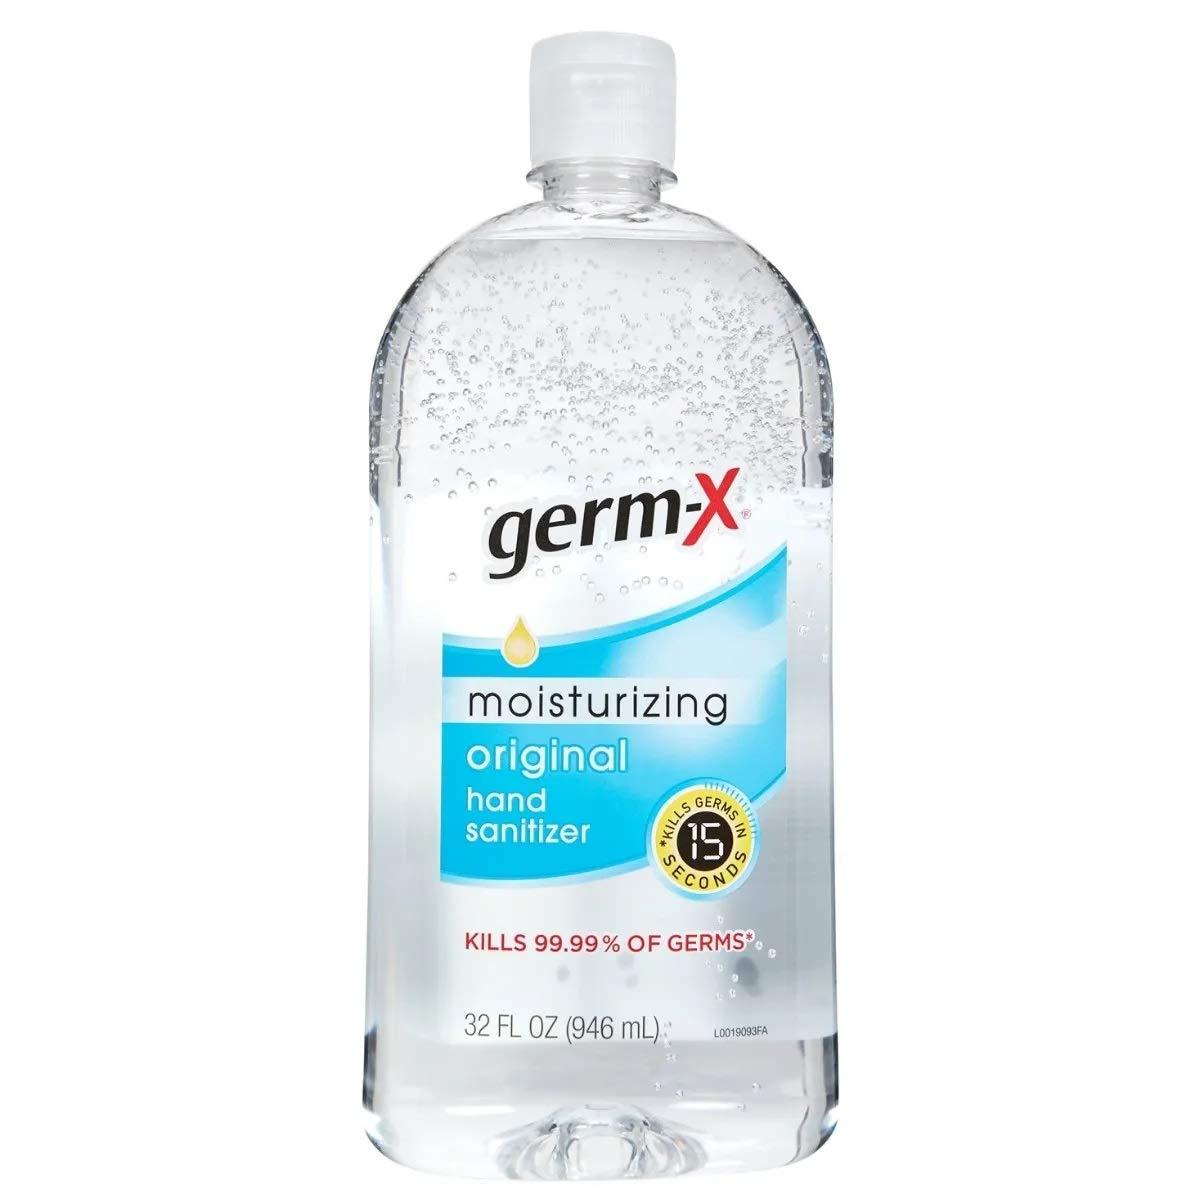 32Oz Germ-X Original Moisturizing Hand Sanitizer for $2.99